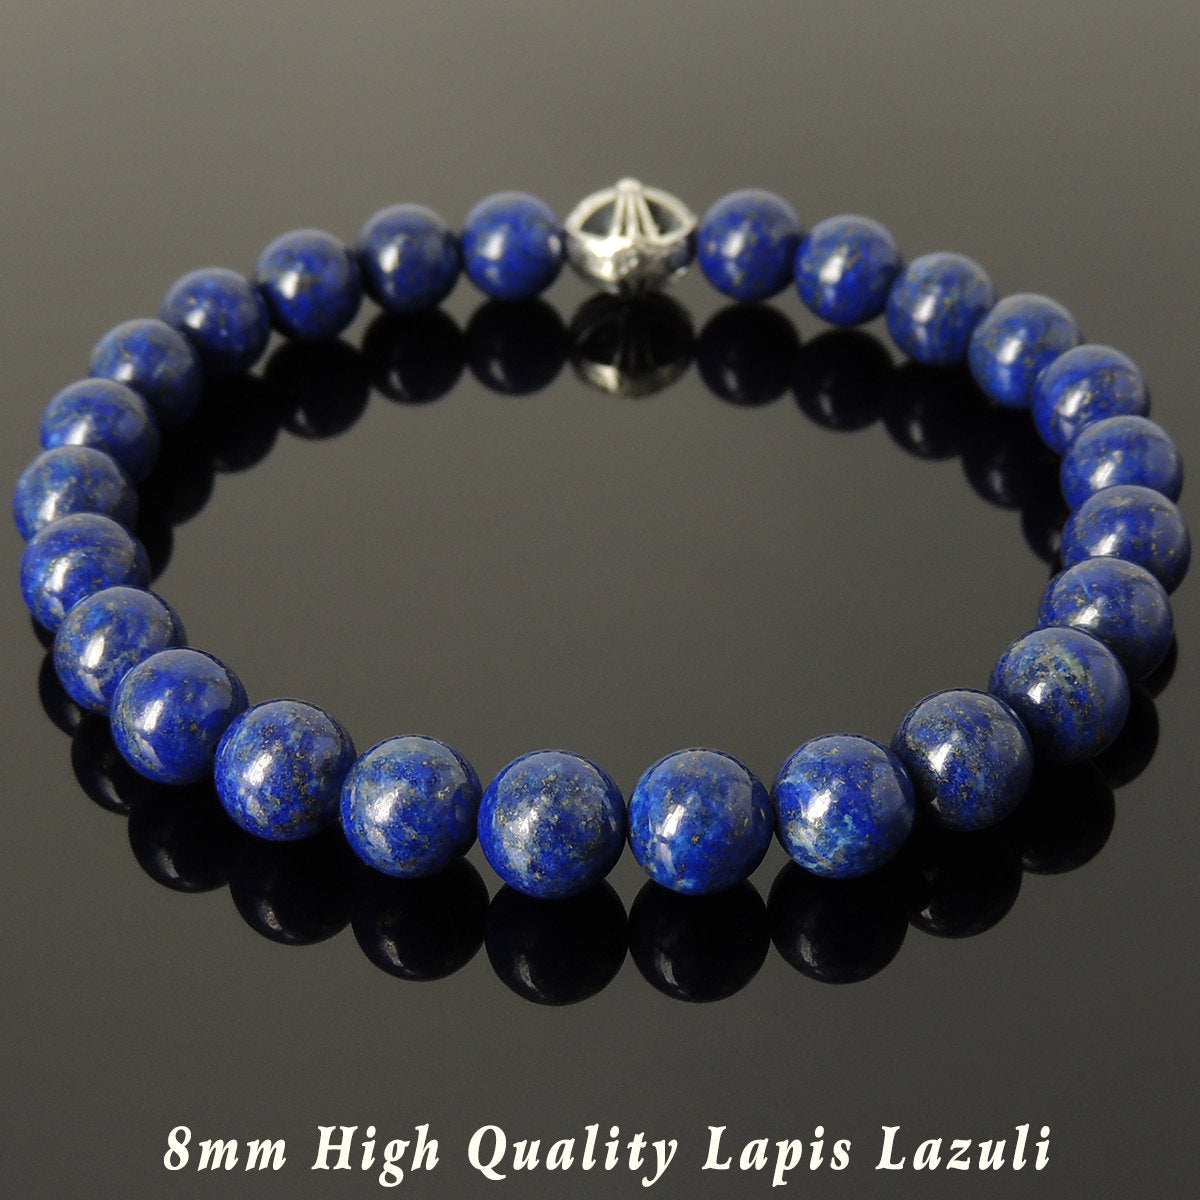 8mm Lapis Lazuli Healing Gemstone Bracelet with S925 Sterling Silver Round Gothic Cross Bead - Handmade by Gem & Silver BR303